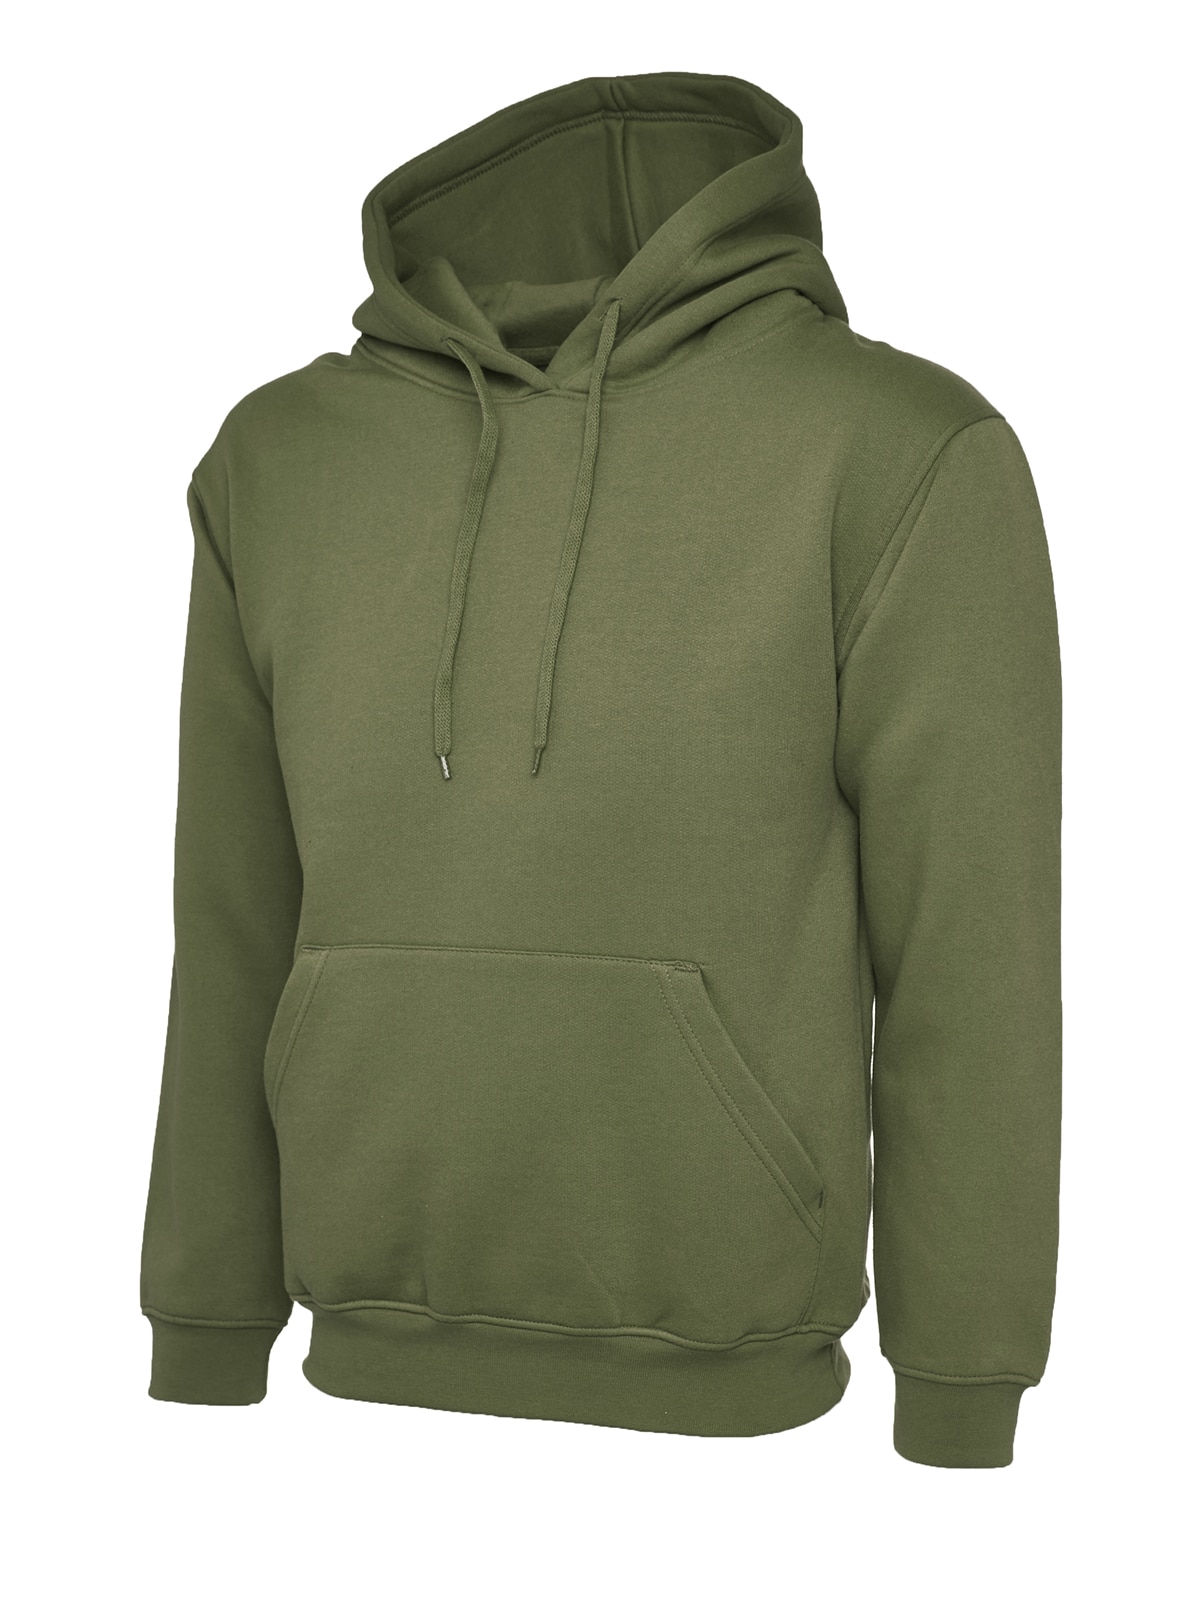 Uneek Classic Hooded Sweatshirt – Unisex Fit